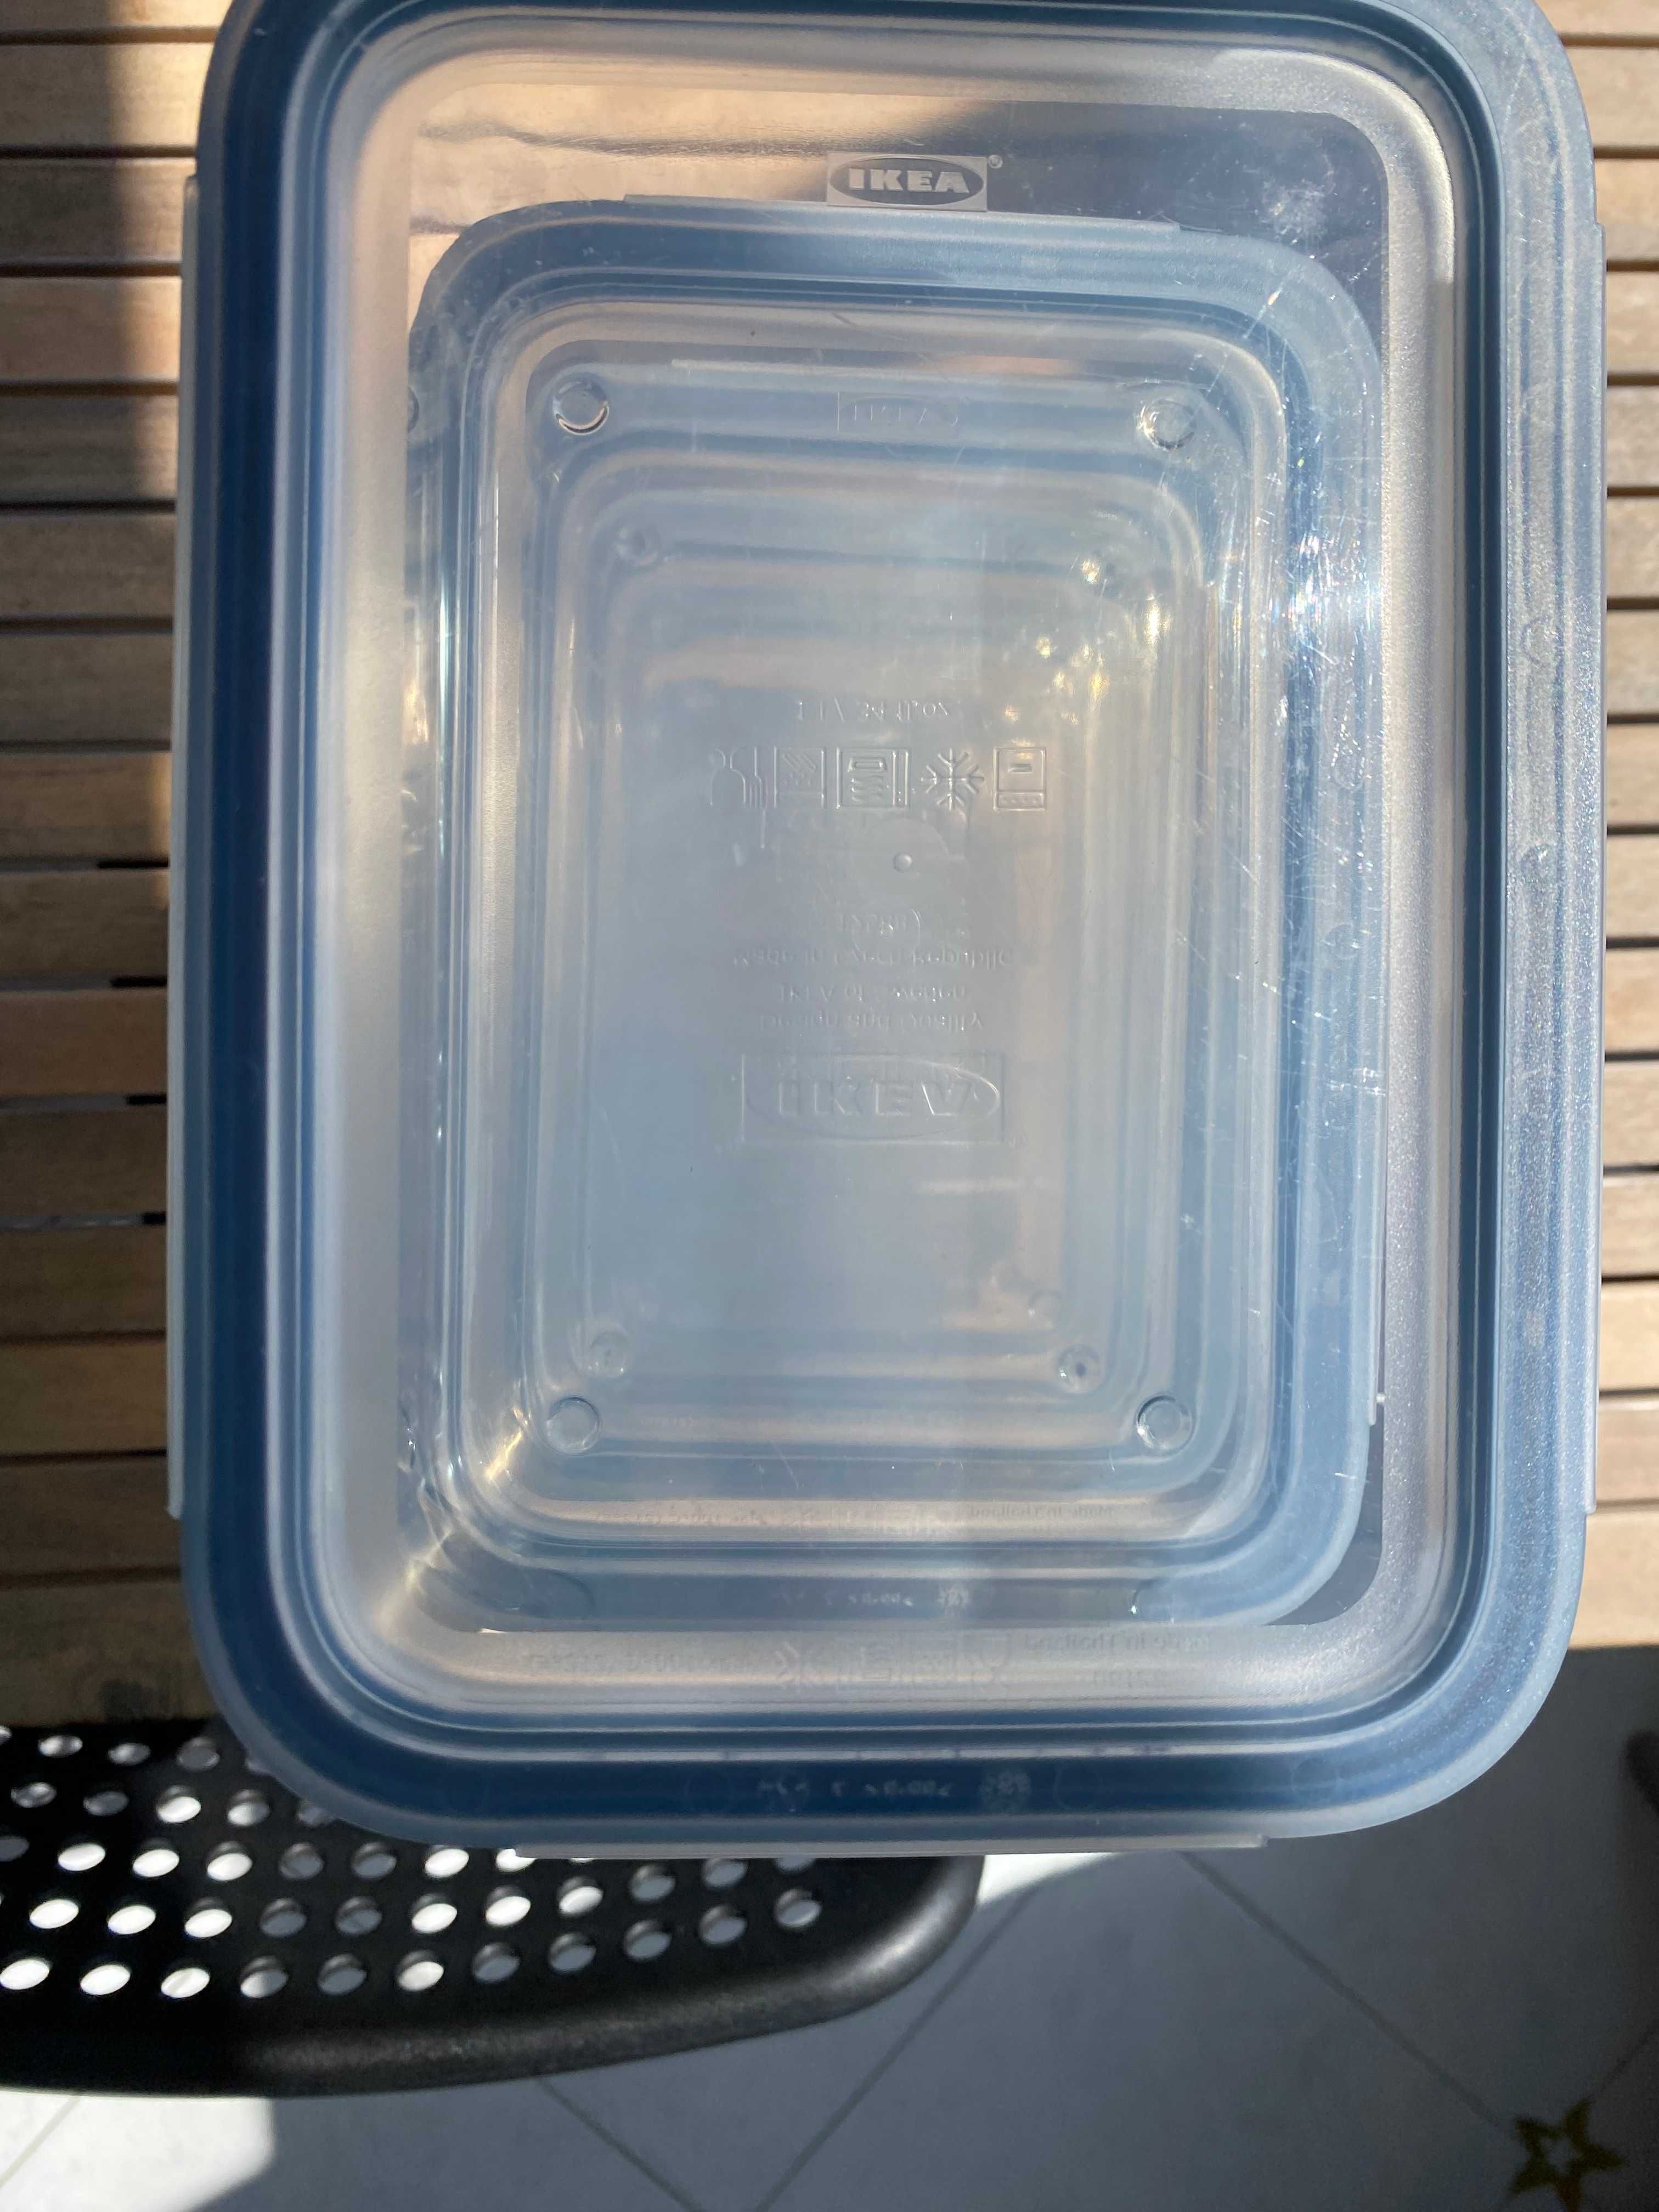 Kit de 8 Tupperwares grandes de vidro